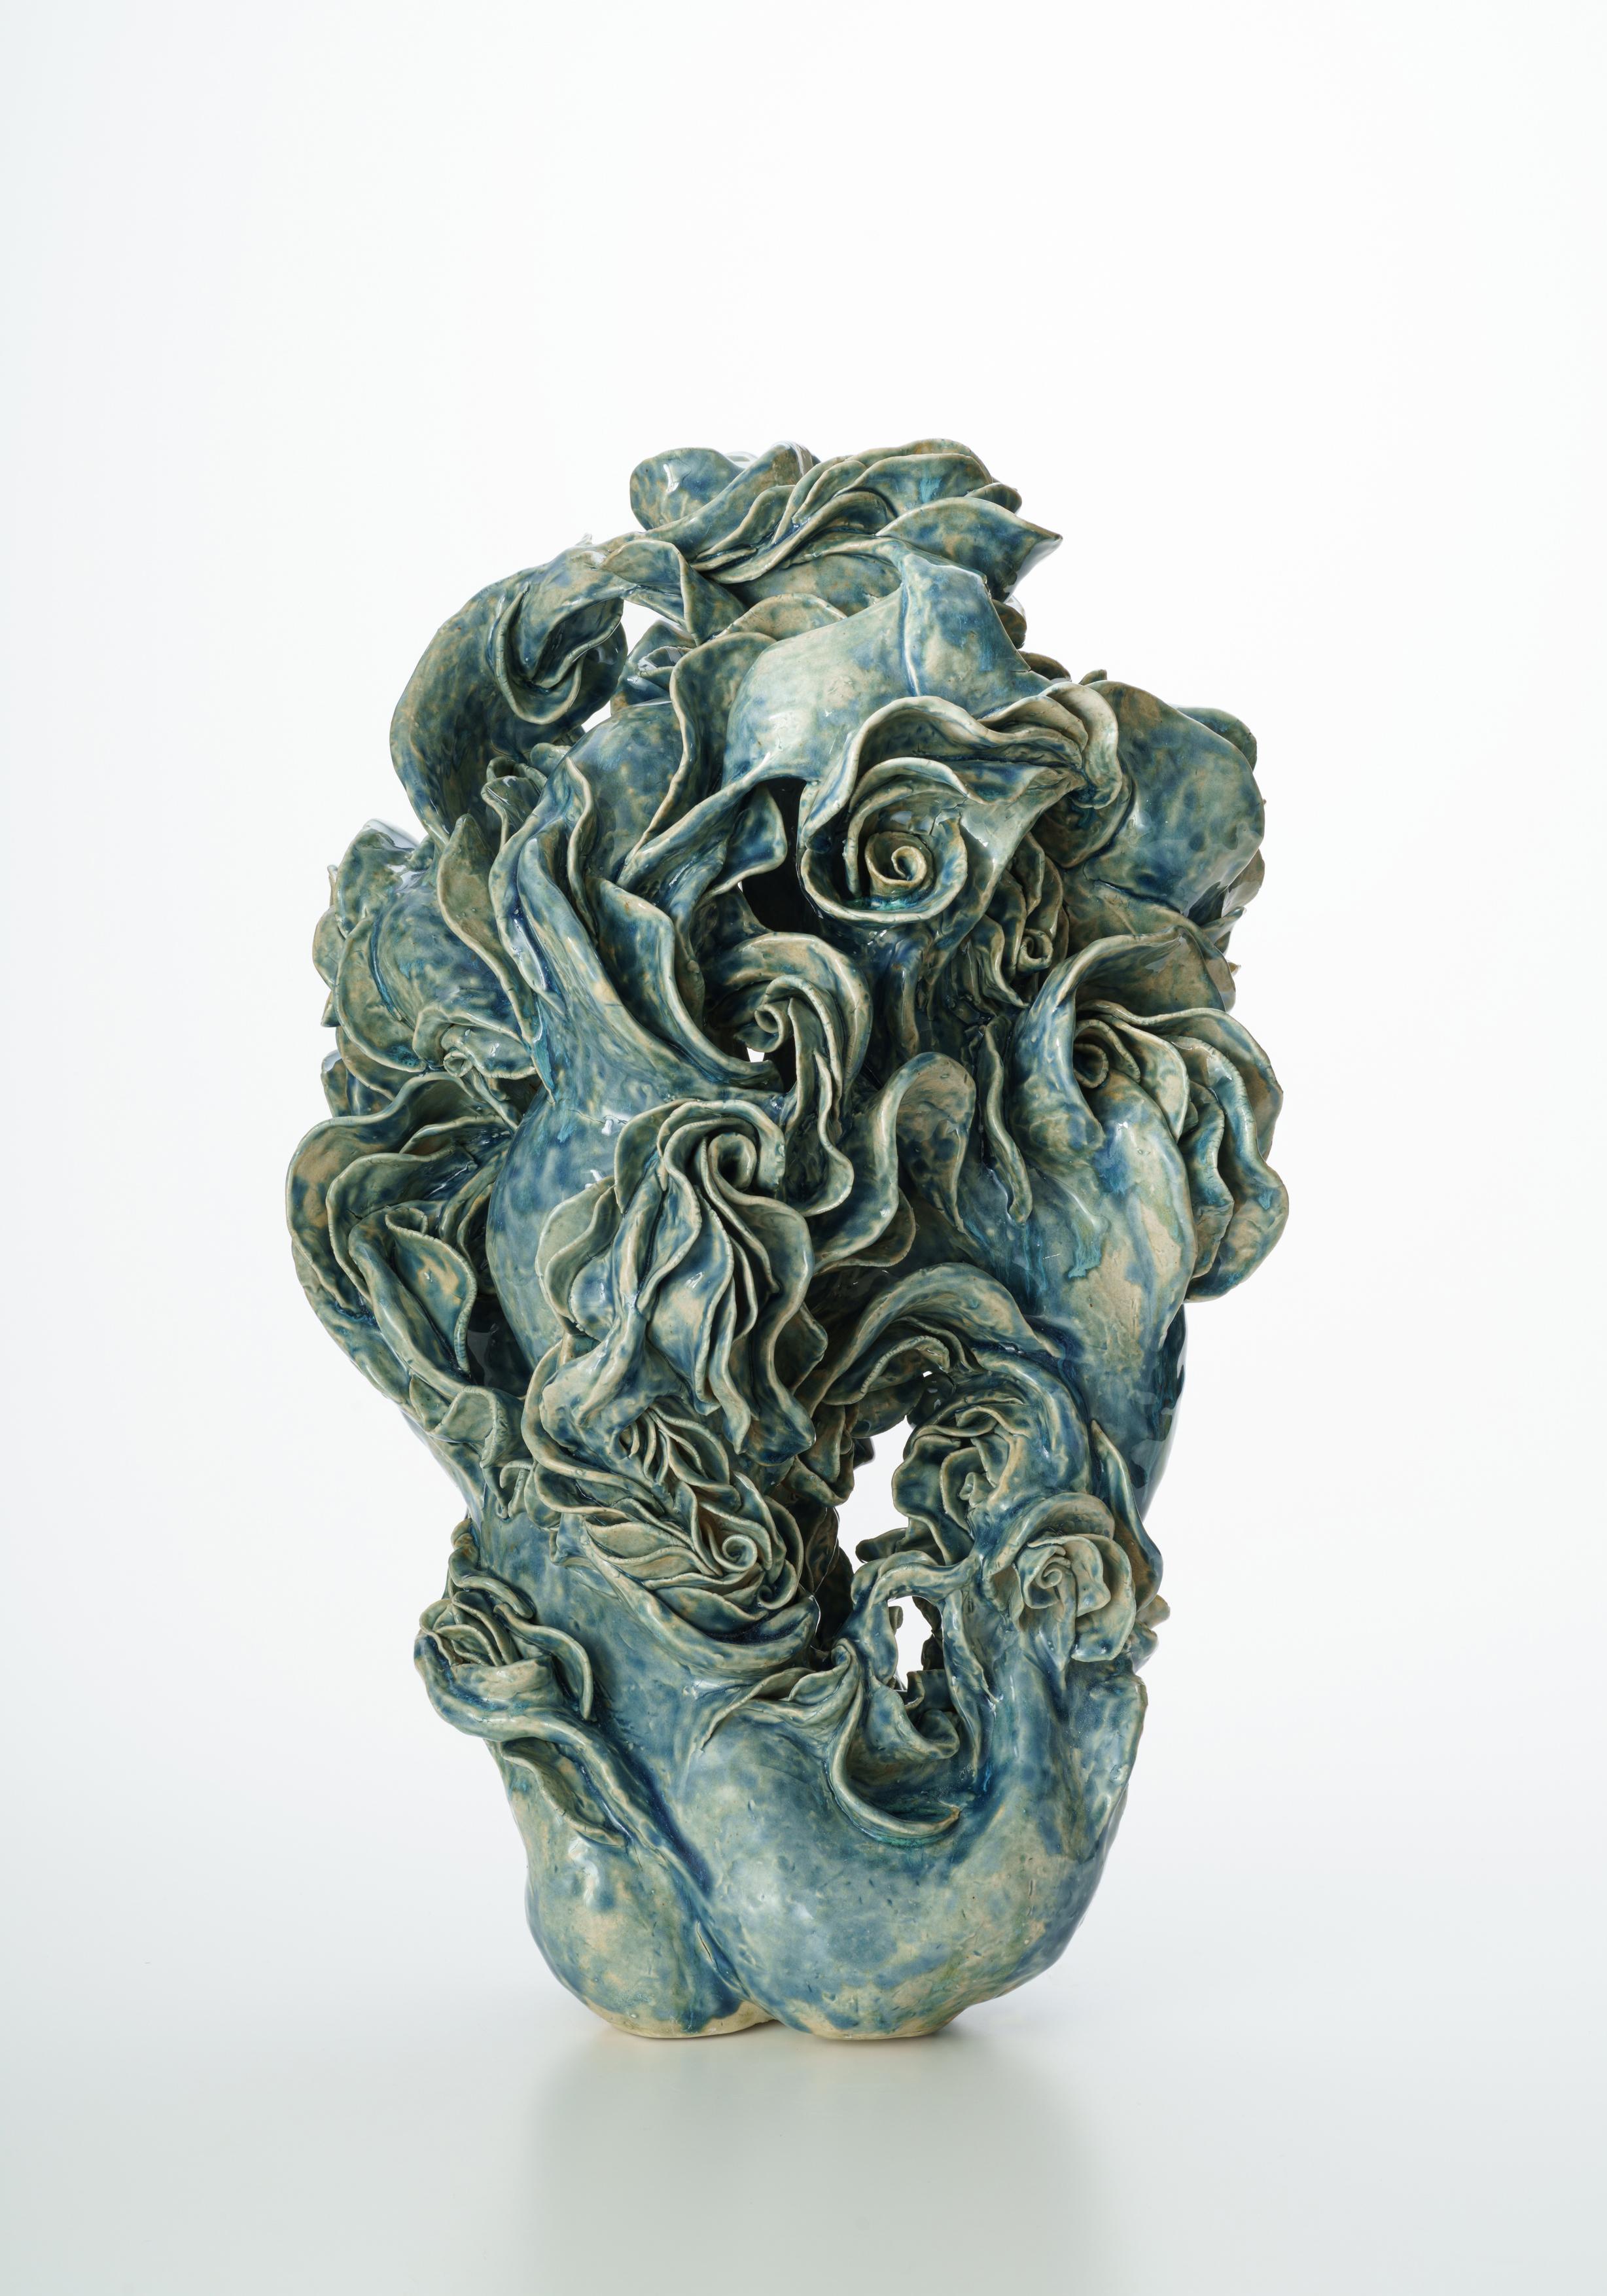 Aya Mori - Rhythm, Contemporary, Abstract, Ceramic, Sculpture,  Biomorphic, Glaze For Sale at 1stDibs